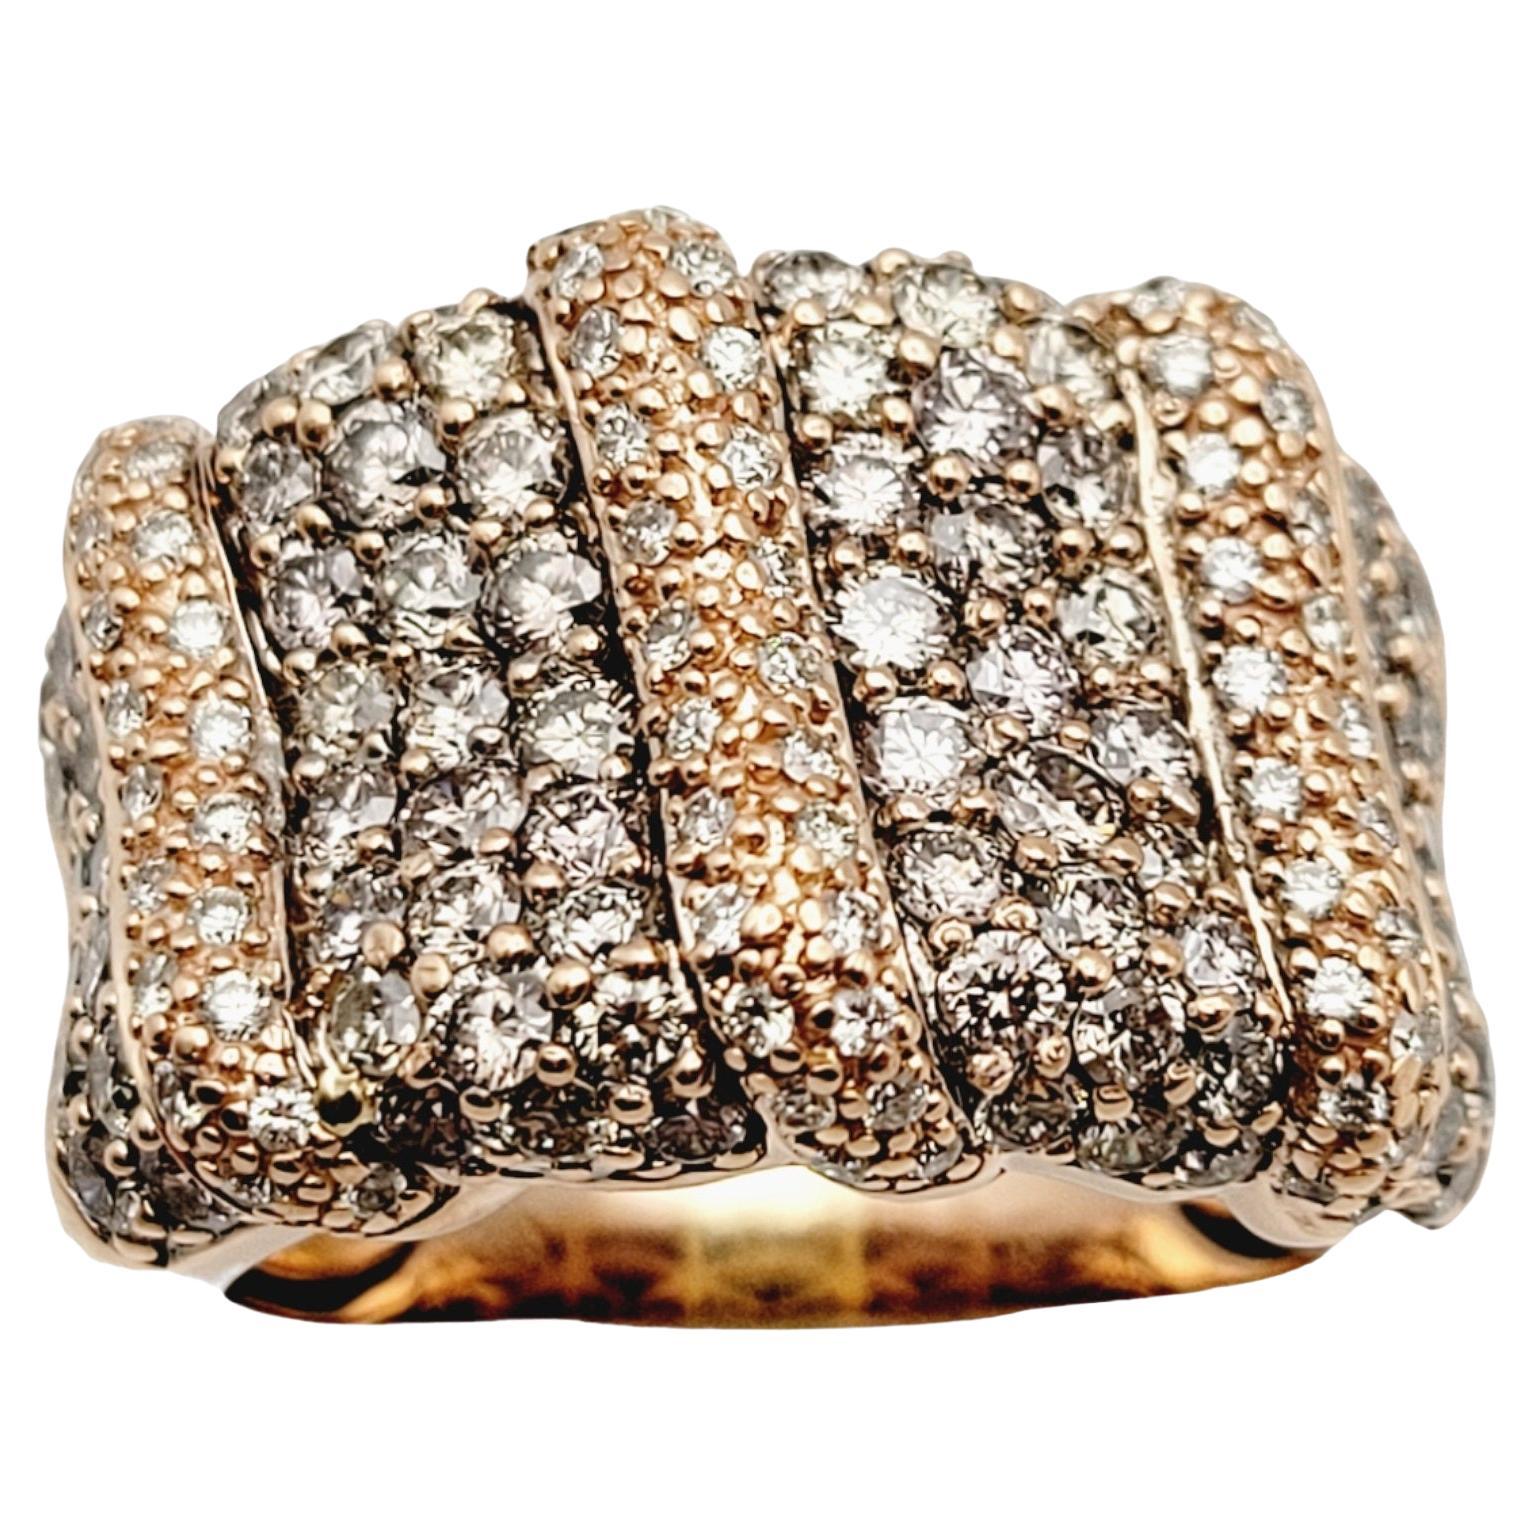 2.14 Carat Light Brown Diamond Pave Band Ring in Polished 14 Karat Rose Gold For Sale